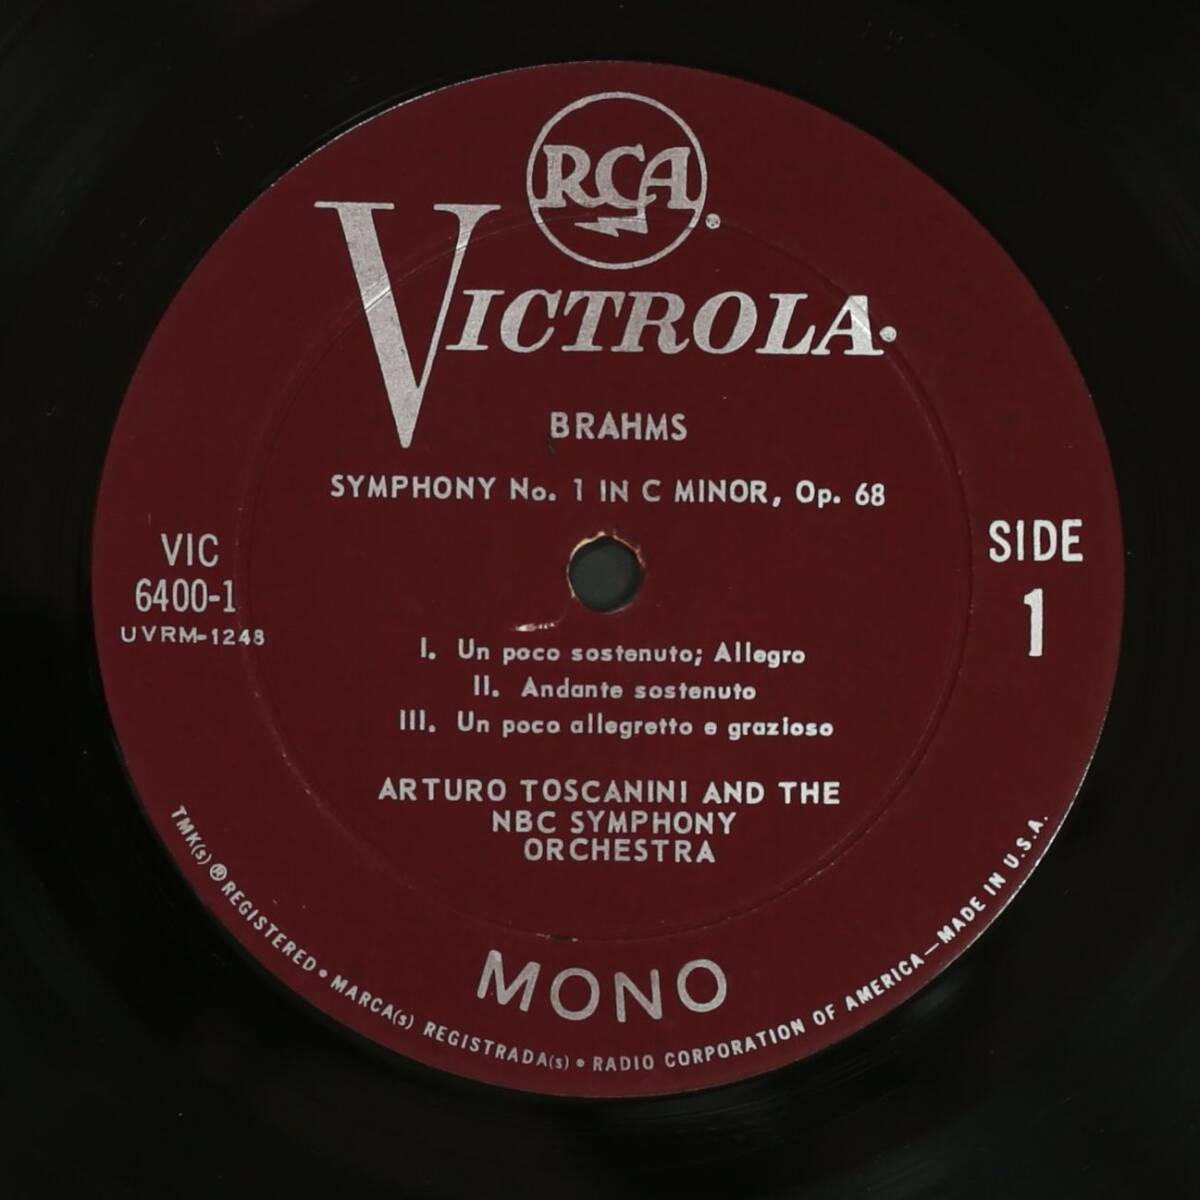 【US盤LP-BOX】トスカニーニ,NBC響/ブラームス:交響曲全集(並良品,アズキ,4枚組,RCA VICTROLA,1967,Arturo Toscanini)の画像4